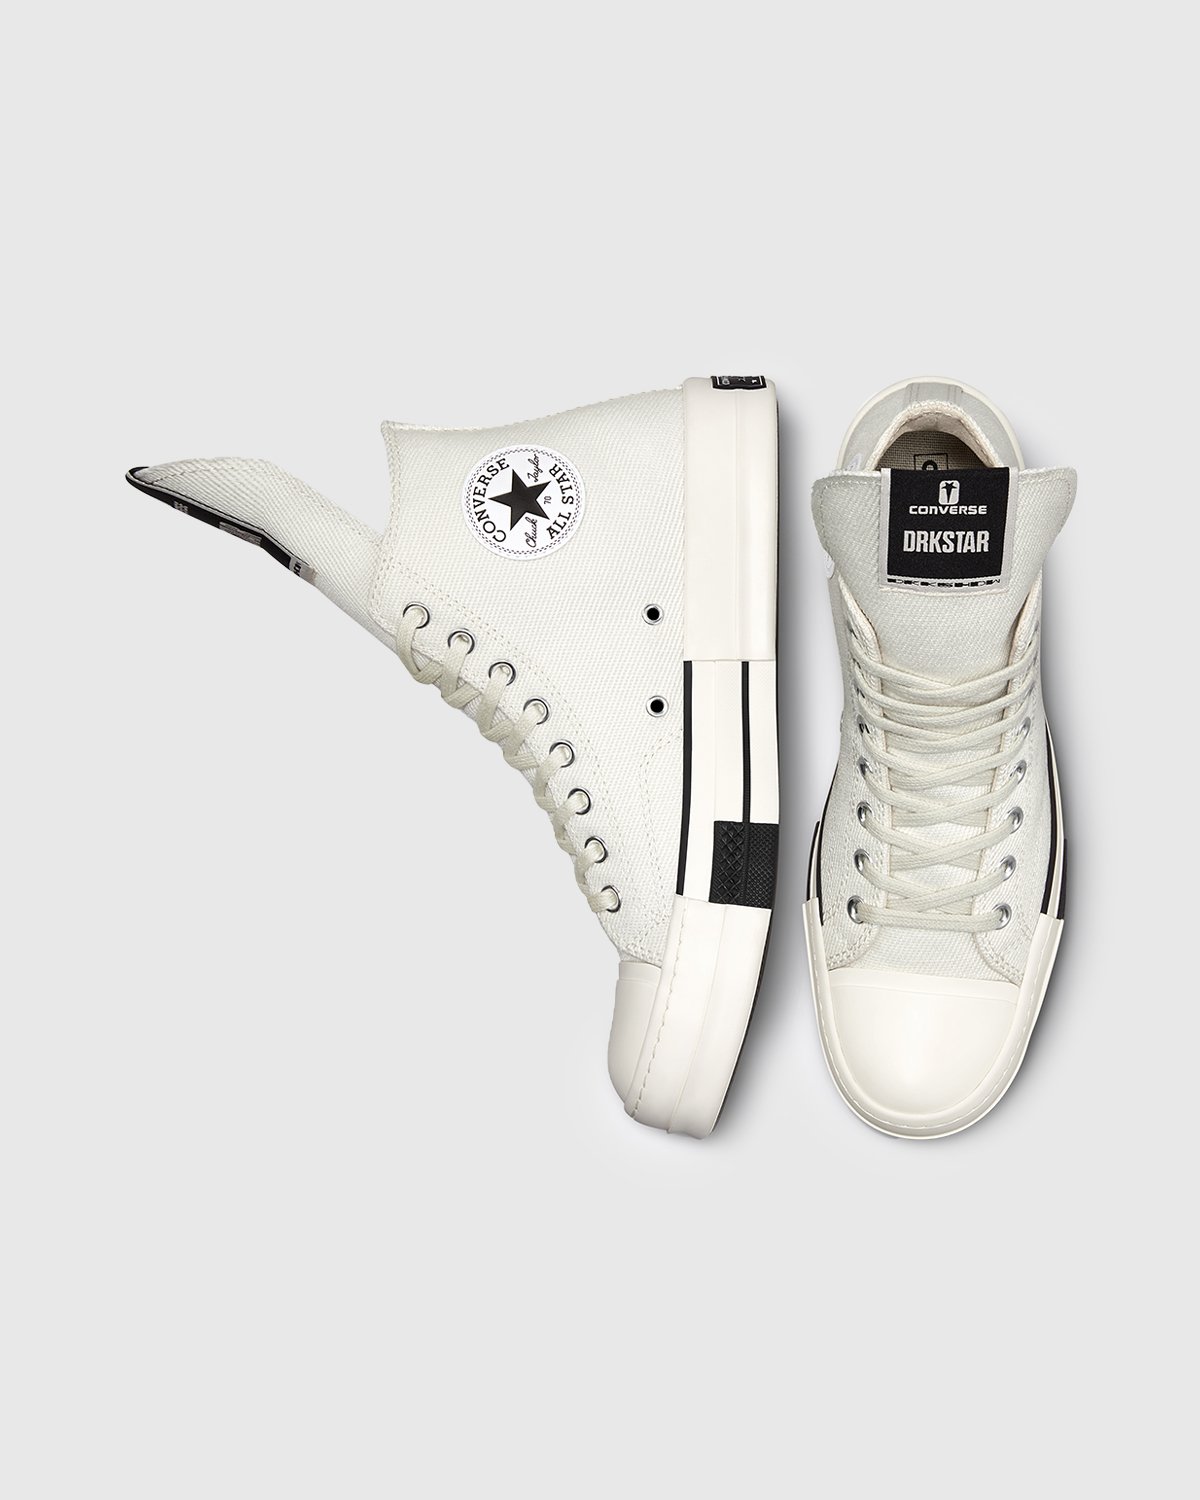 Converse x Rick Owens - DRKSTAR Chuck 70 High Lily White Egret Black - Footwear - White - Image 4